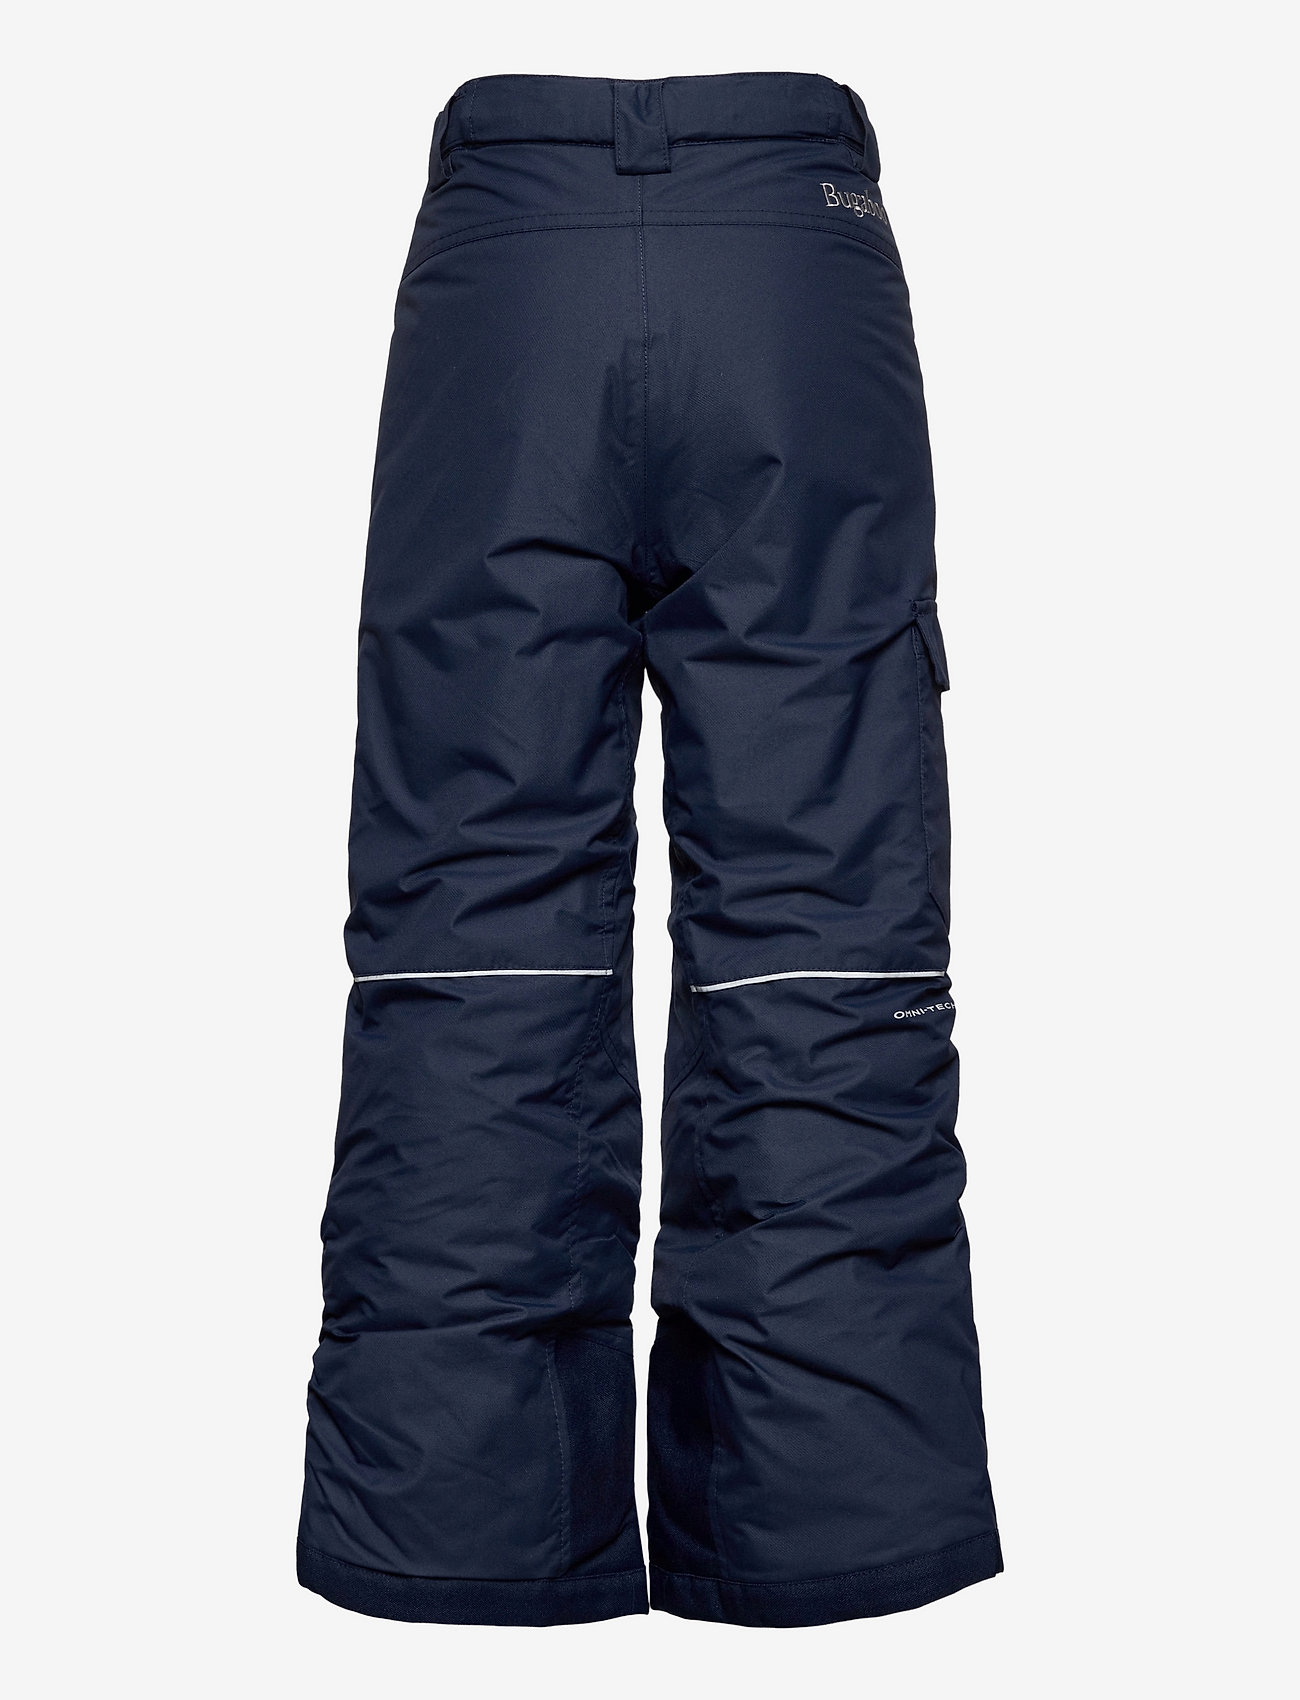 Columbia Sportswear - Bugaboo II Pant - ski pants - collegiate navy - 1